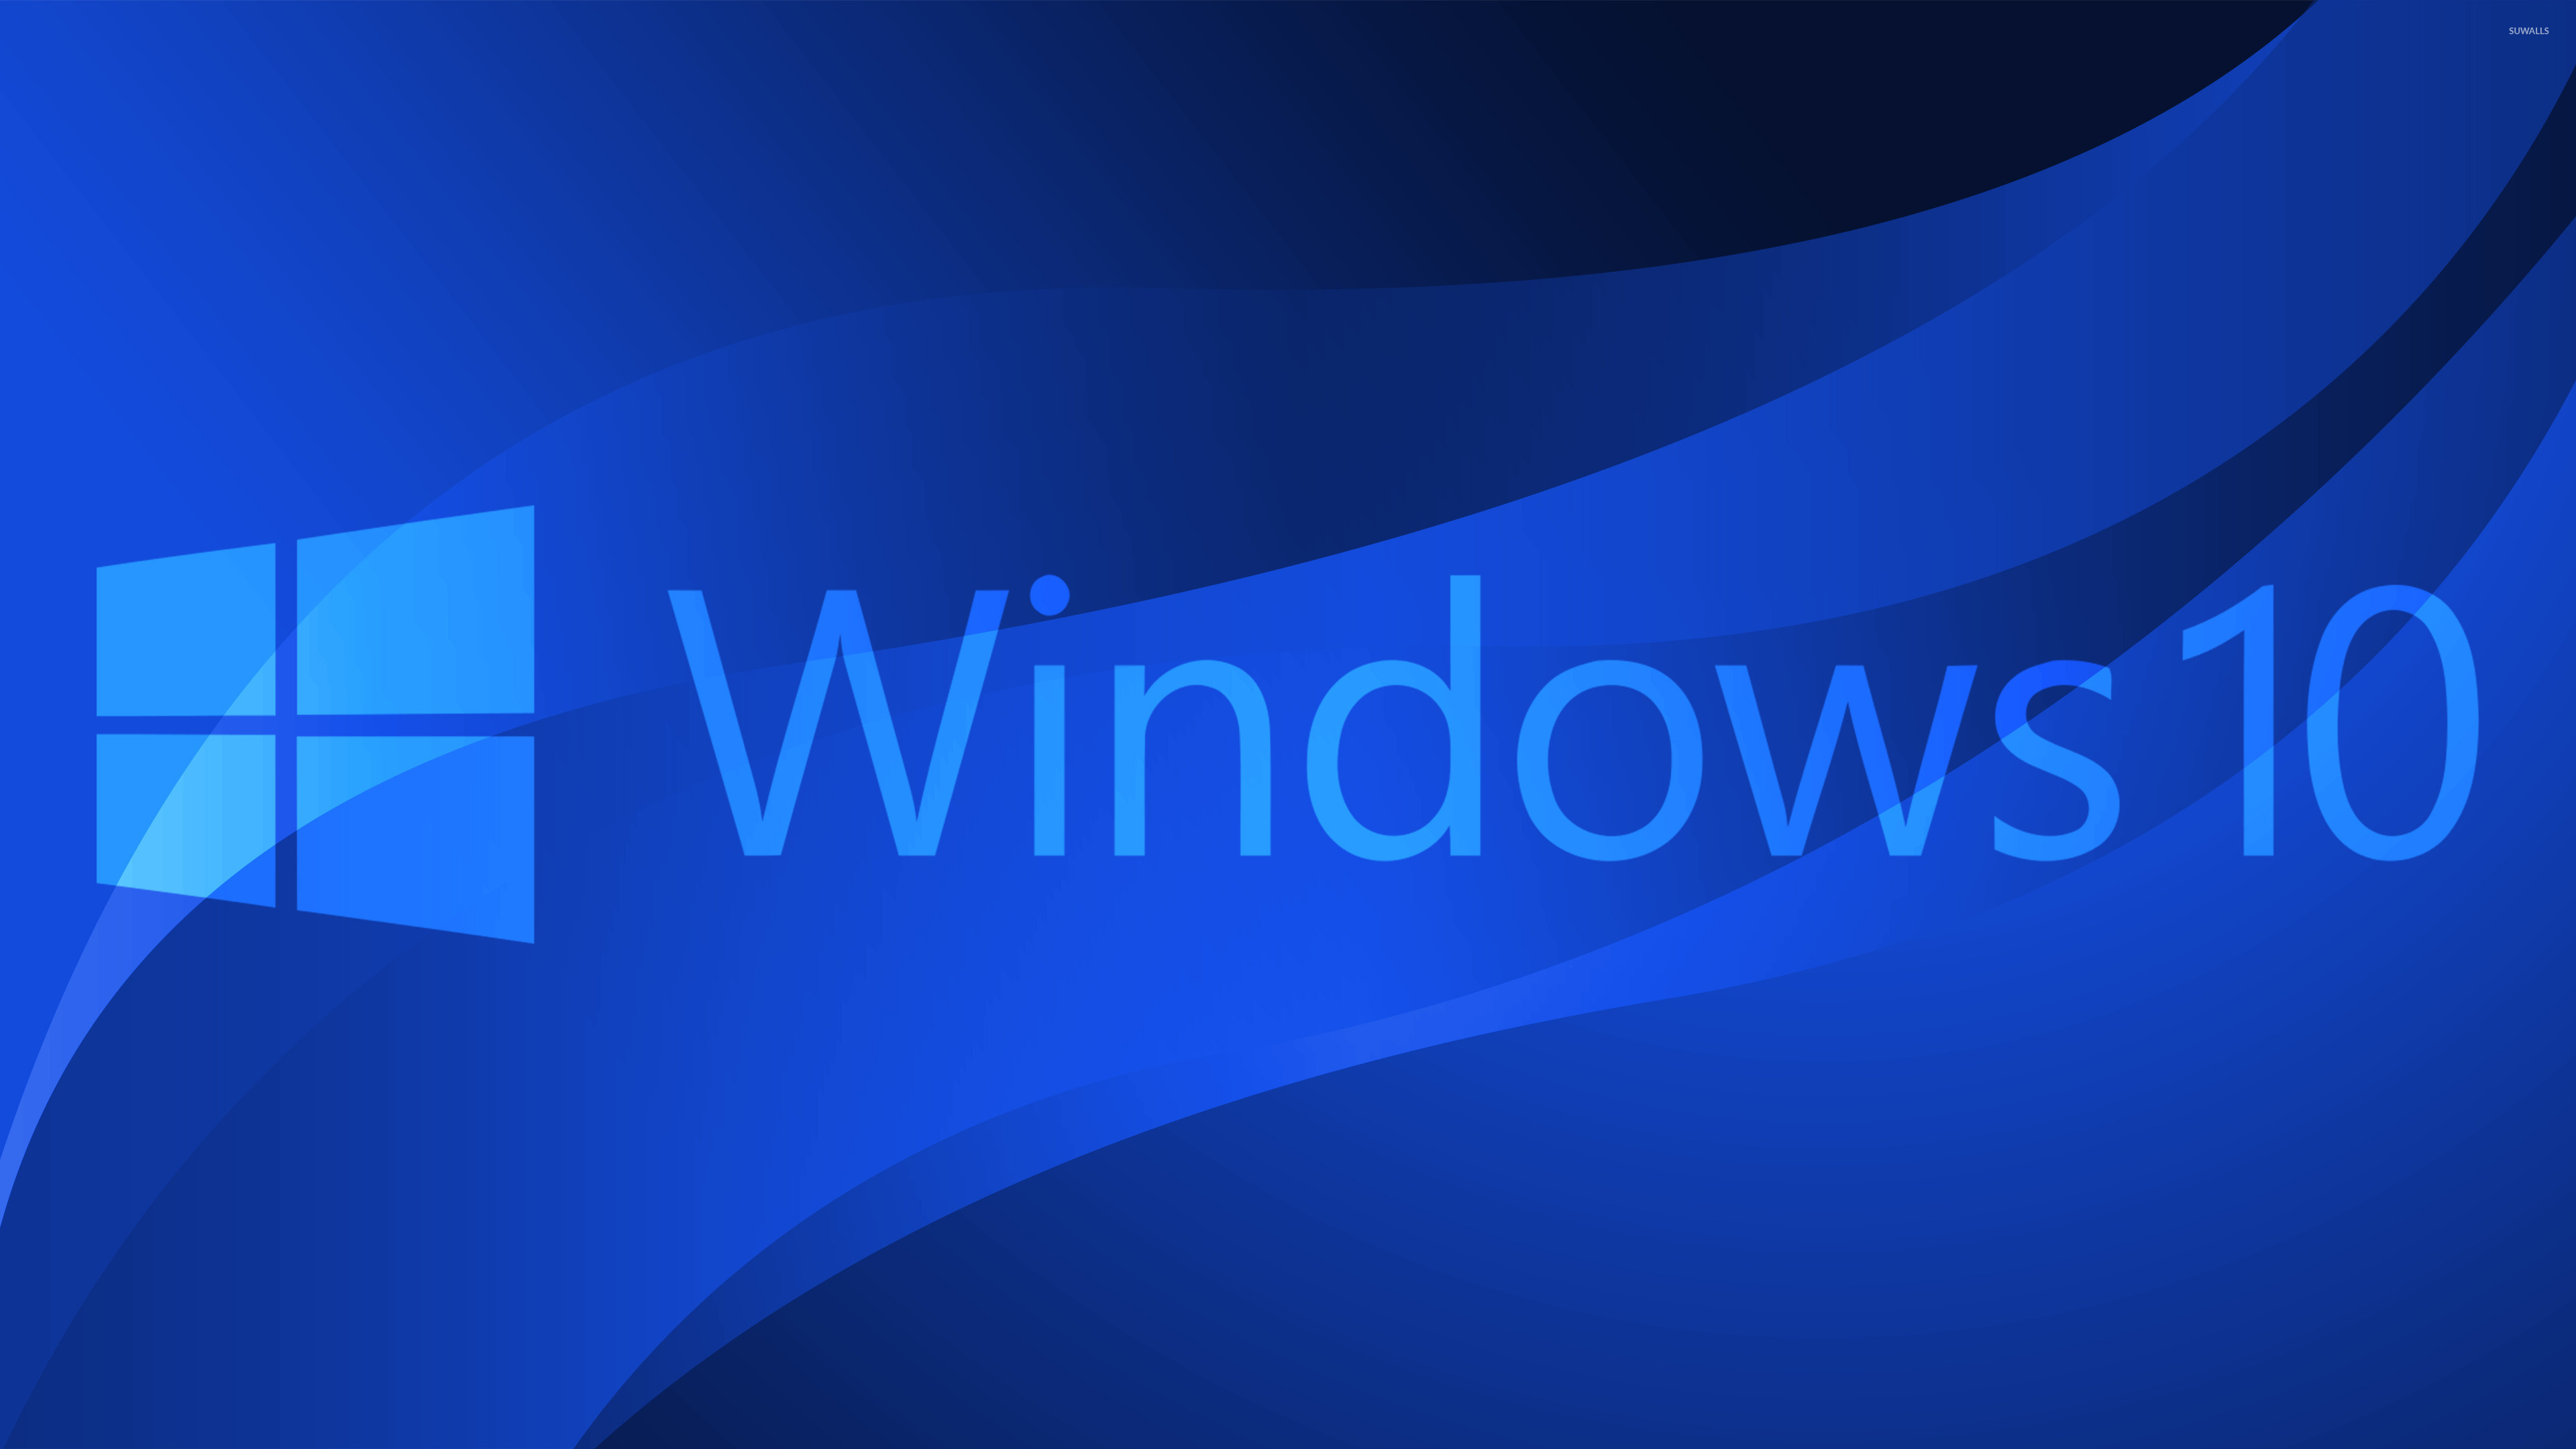 Windows 10 text logo on blue curves wallpaper wallpaper